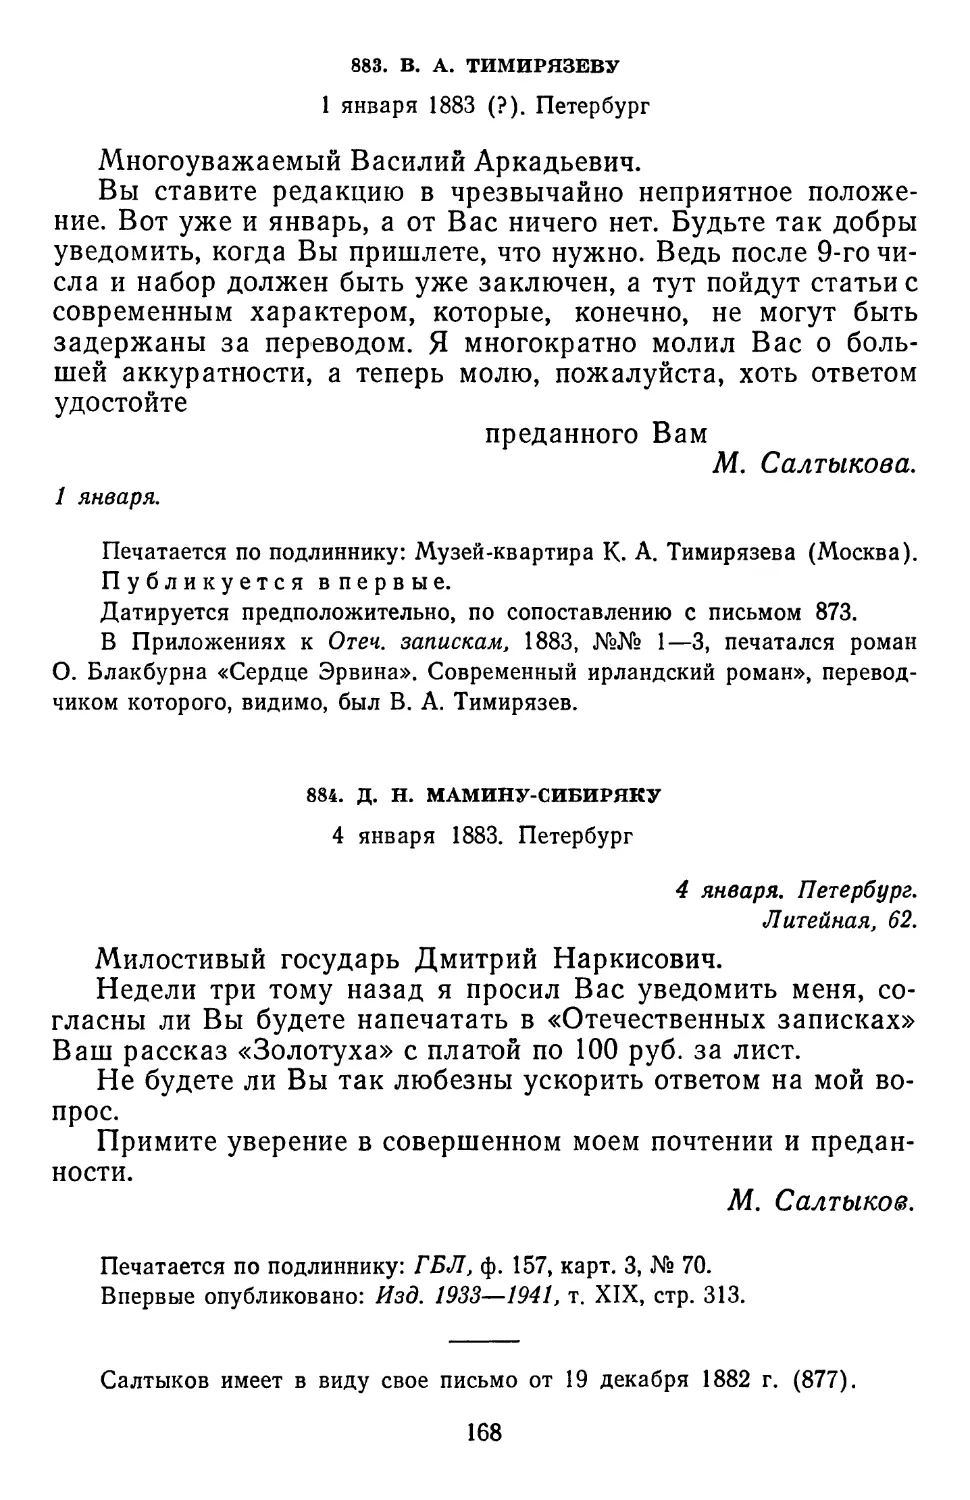 884.Д. Н. Мамину-Сибиряку. 4 января 1883. Петербург